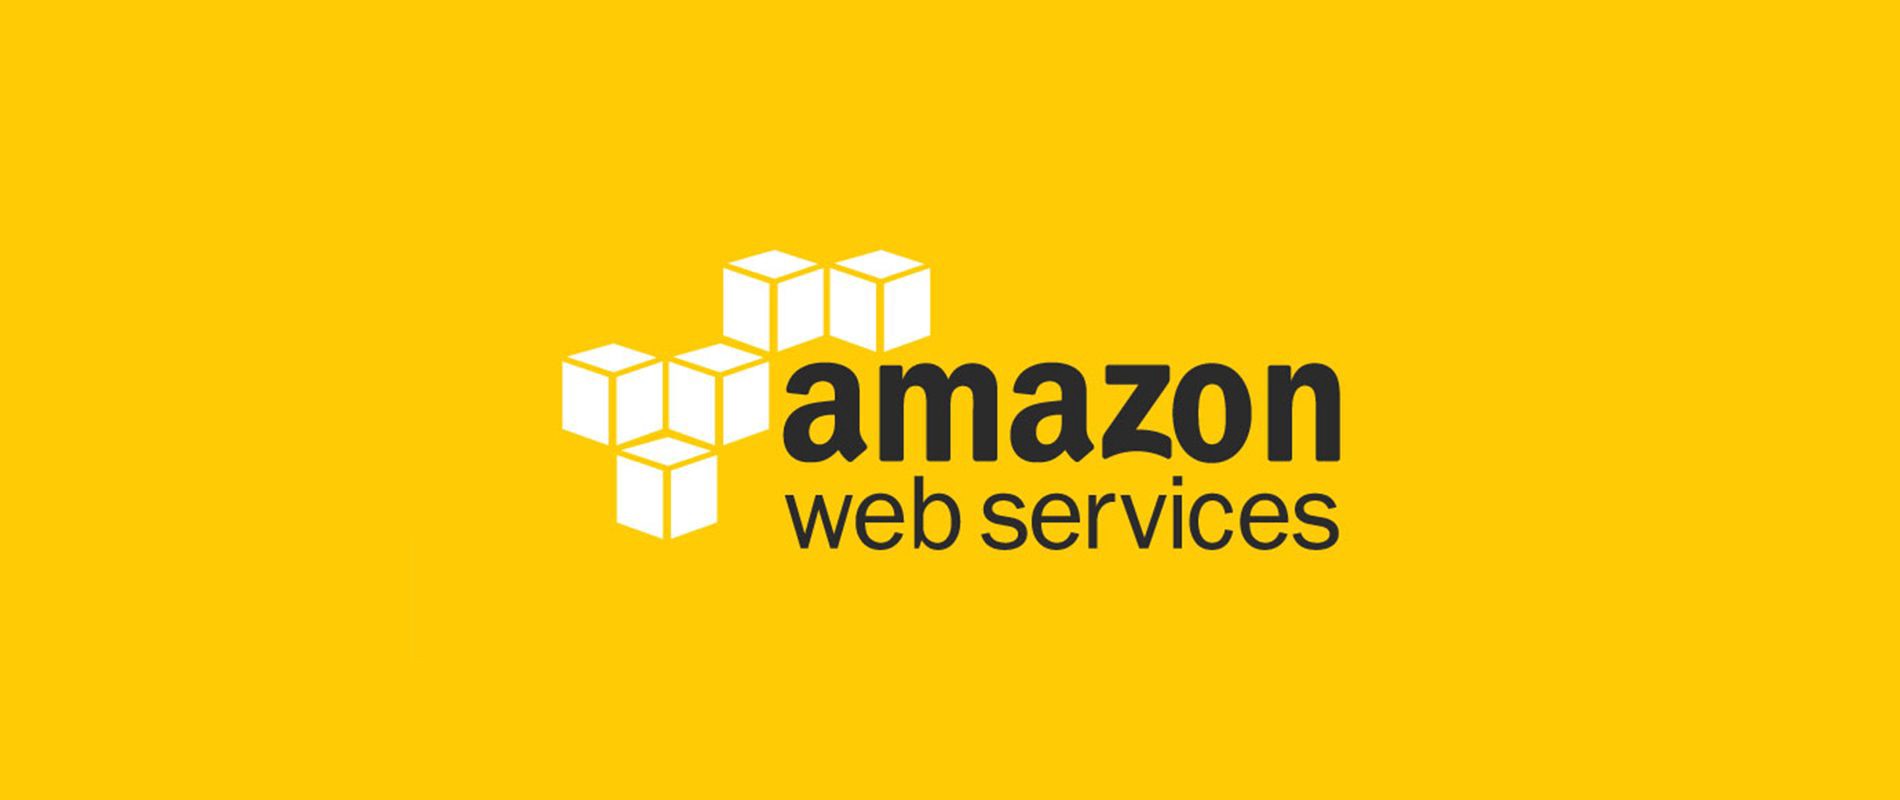 Amazon Web Services – Architecting on AWS Accelerator